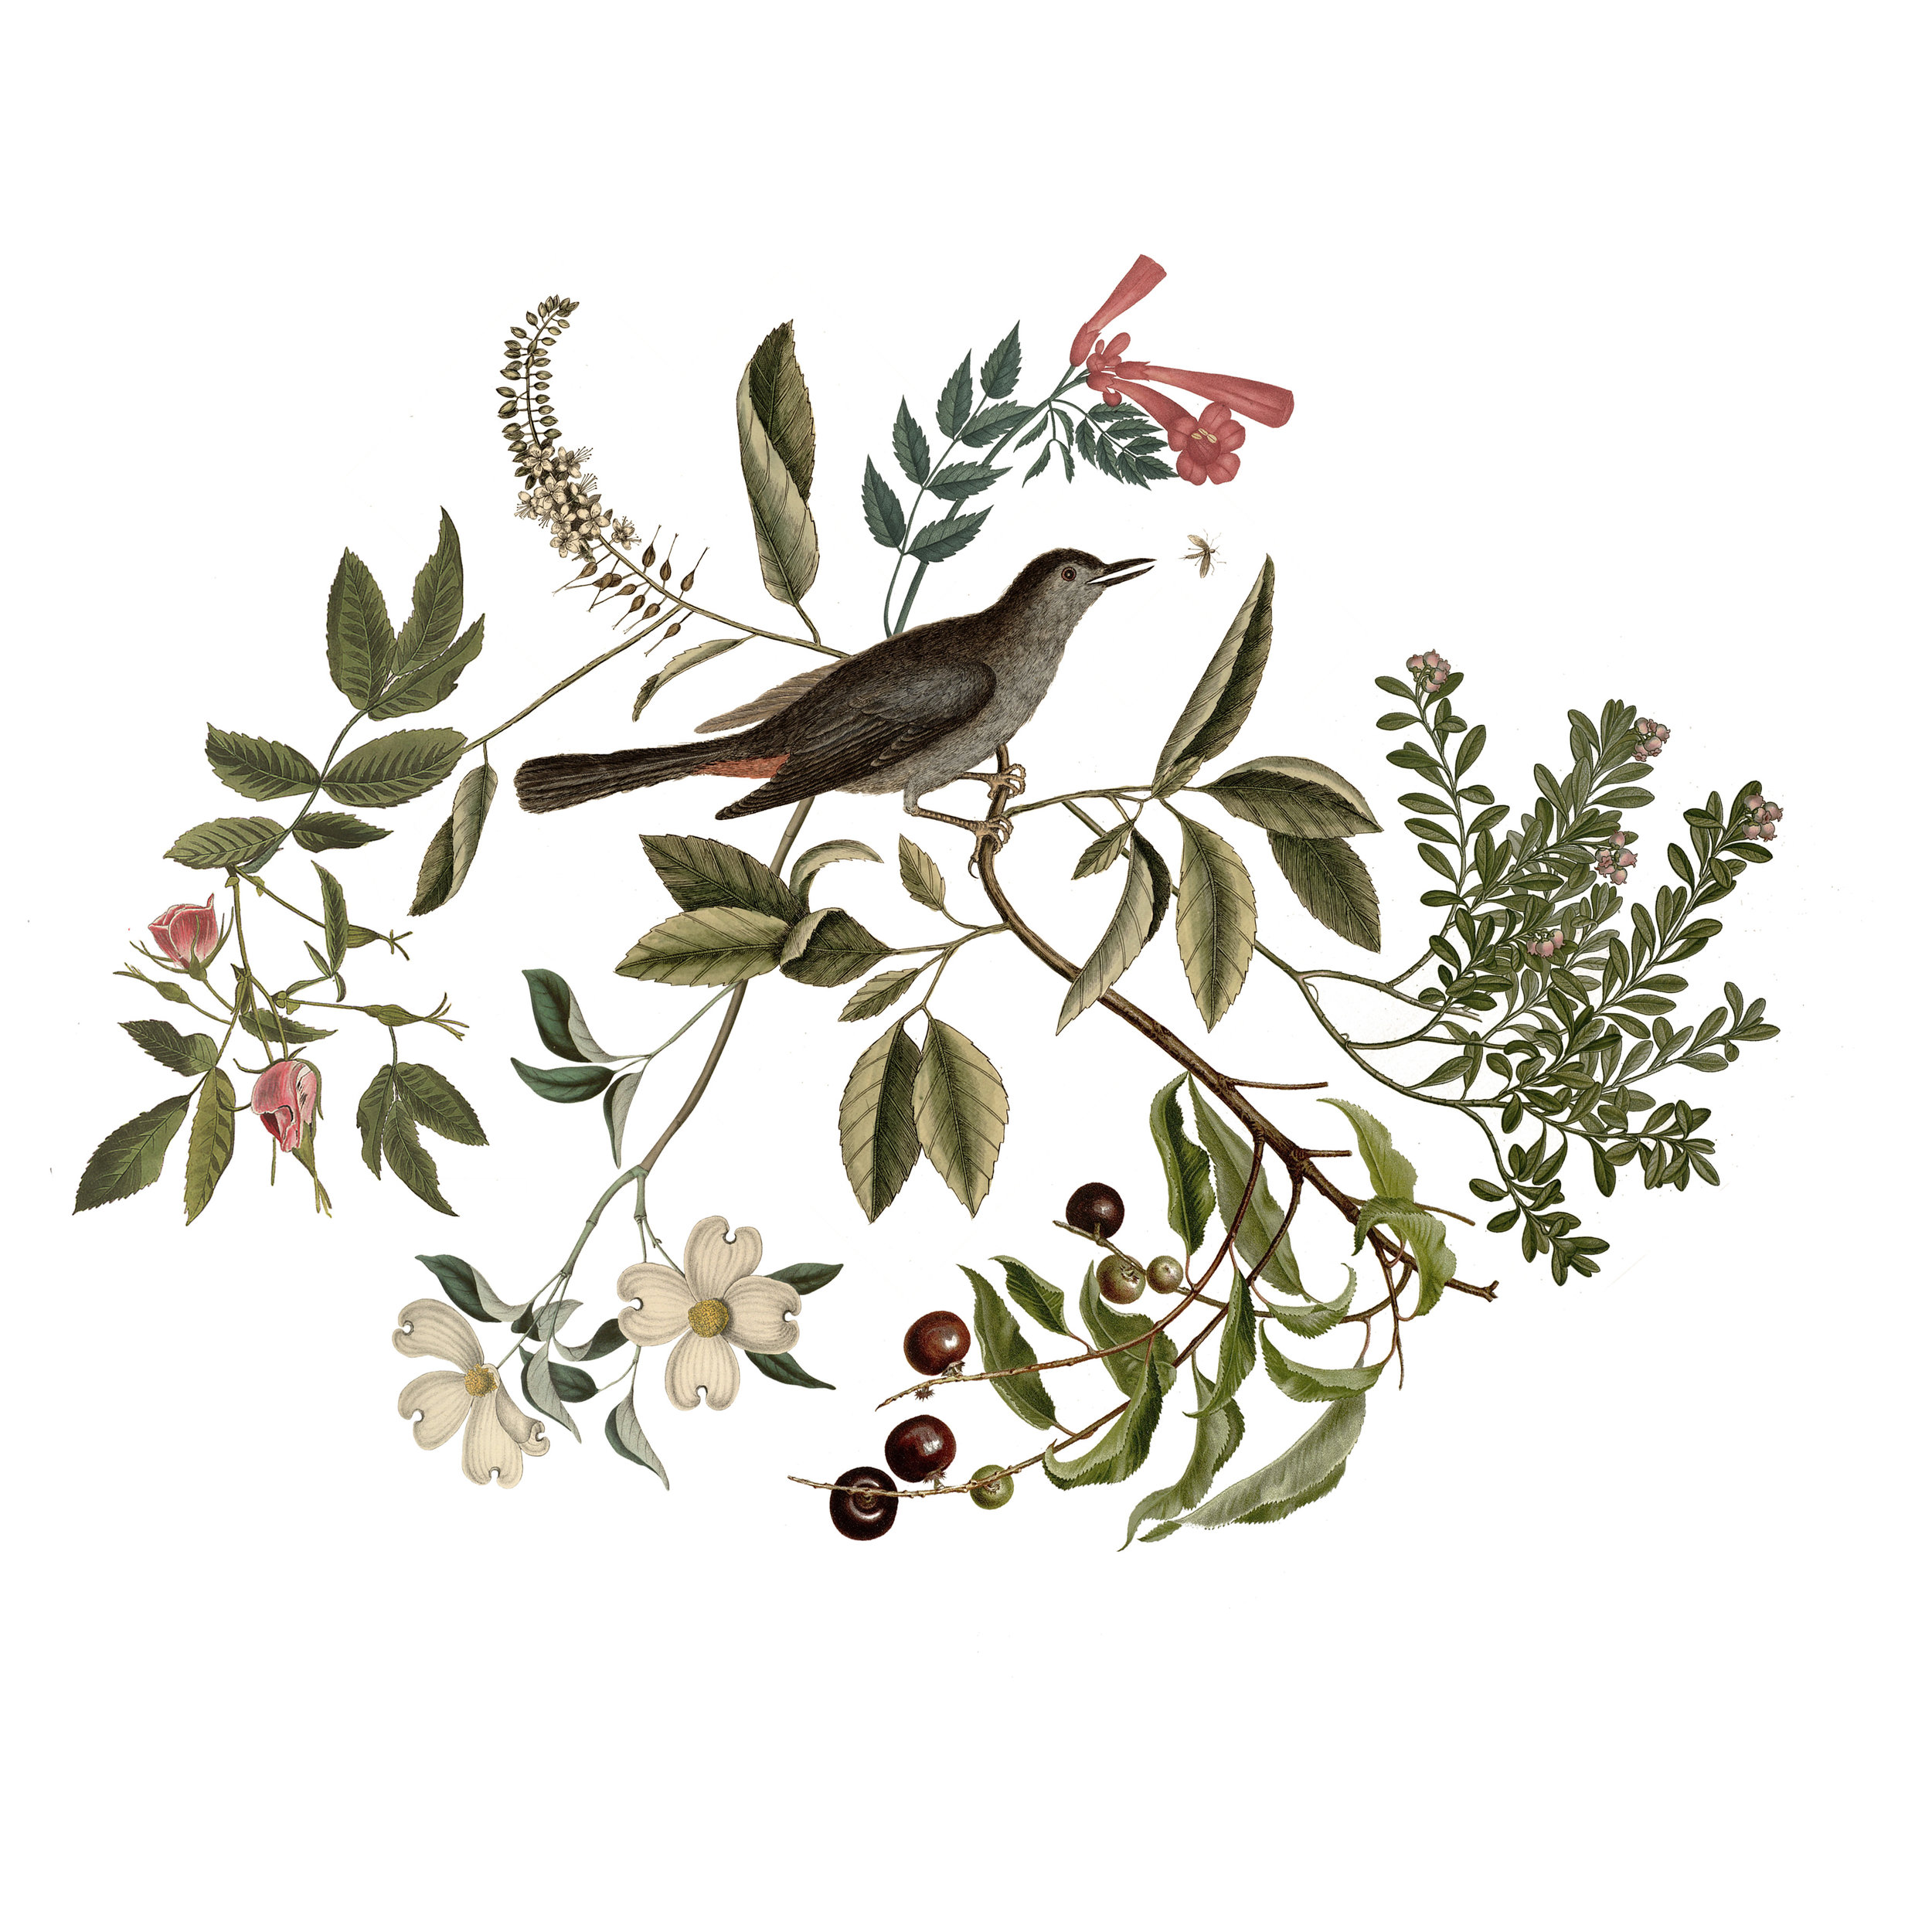  Digital Illustration of select flora native to Long Island  Clockwise from top: Trumpet Vine, Summersweet, American Cranberry, Black Cherry, Flowering Dogwood &amp; Carolina Rose 